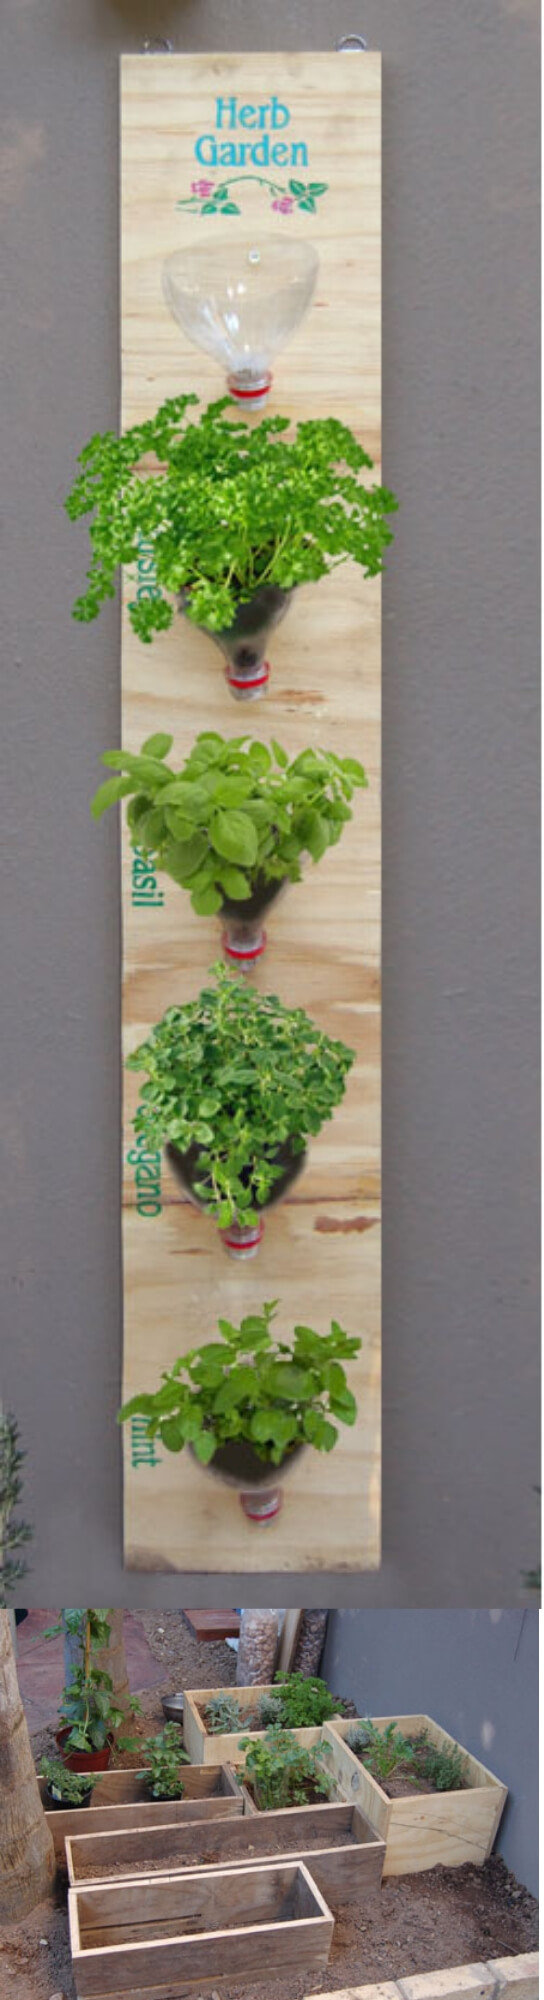 Make a hanging herb garden